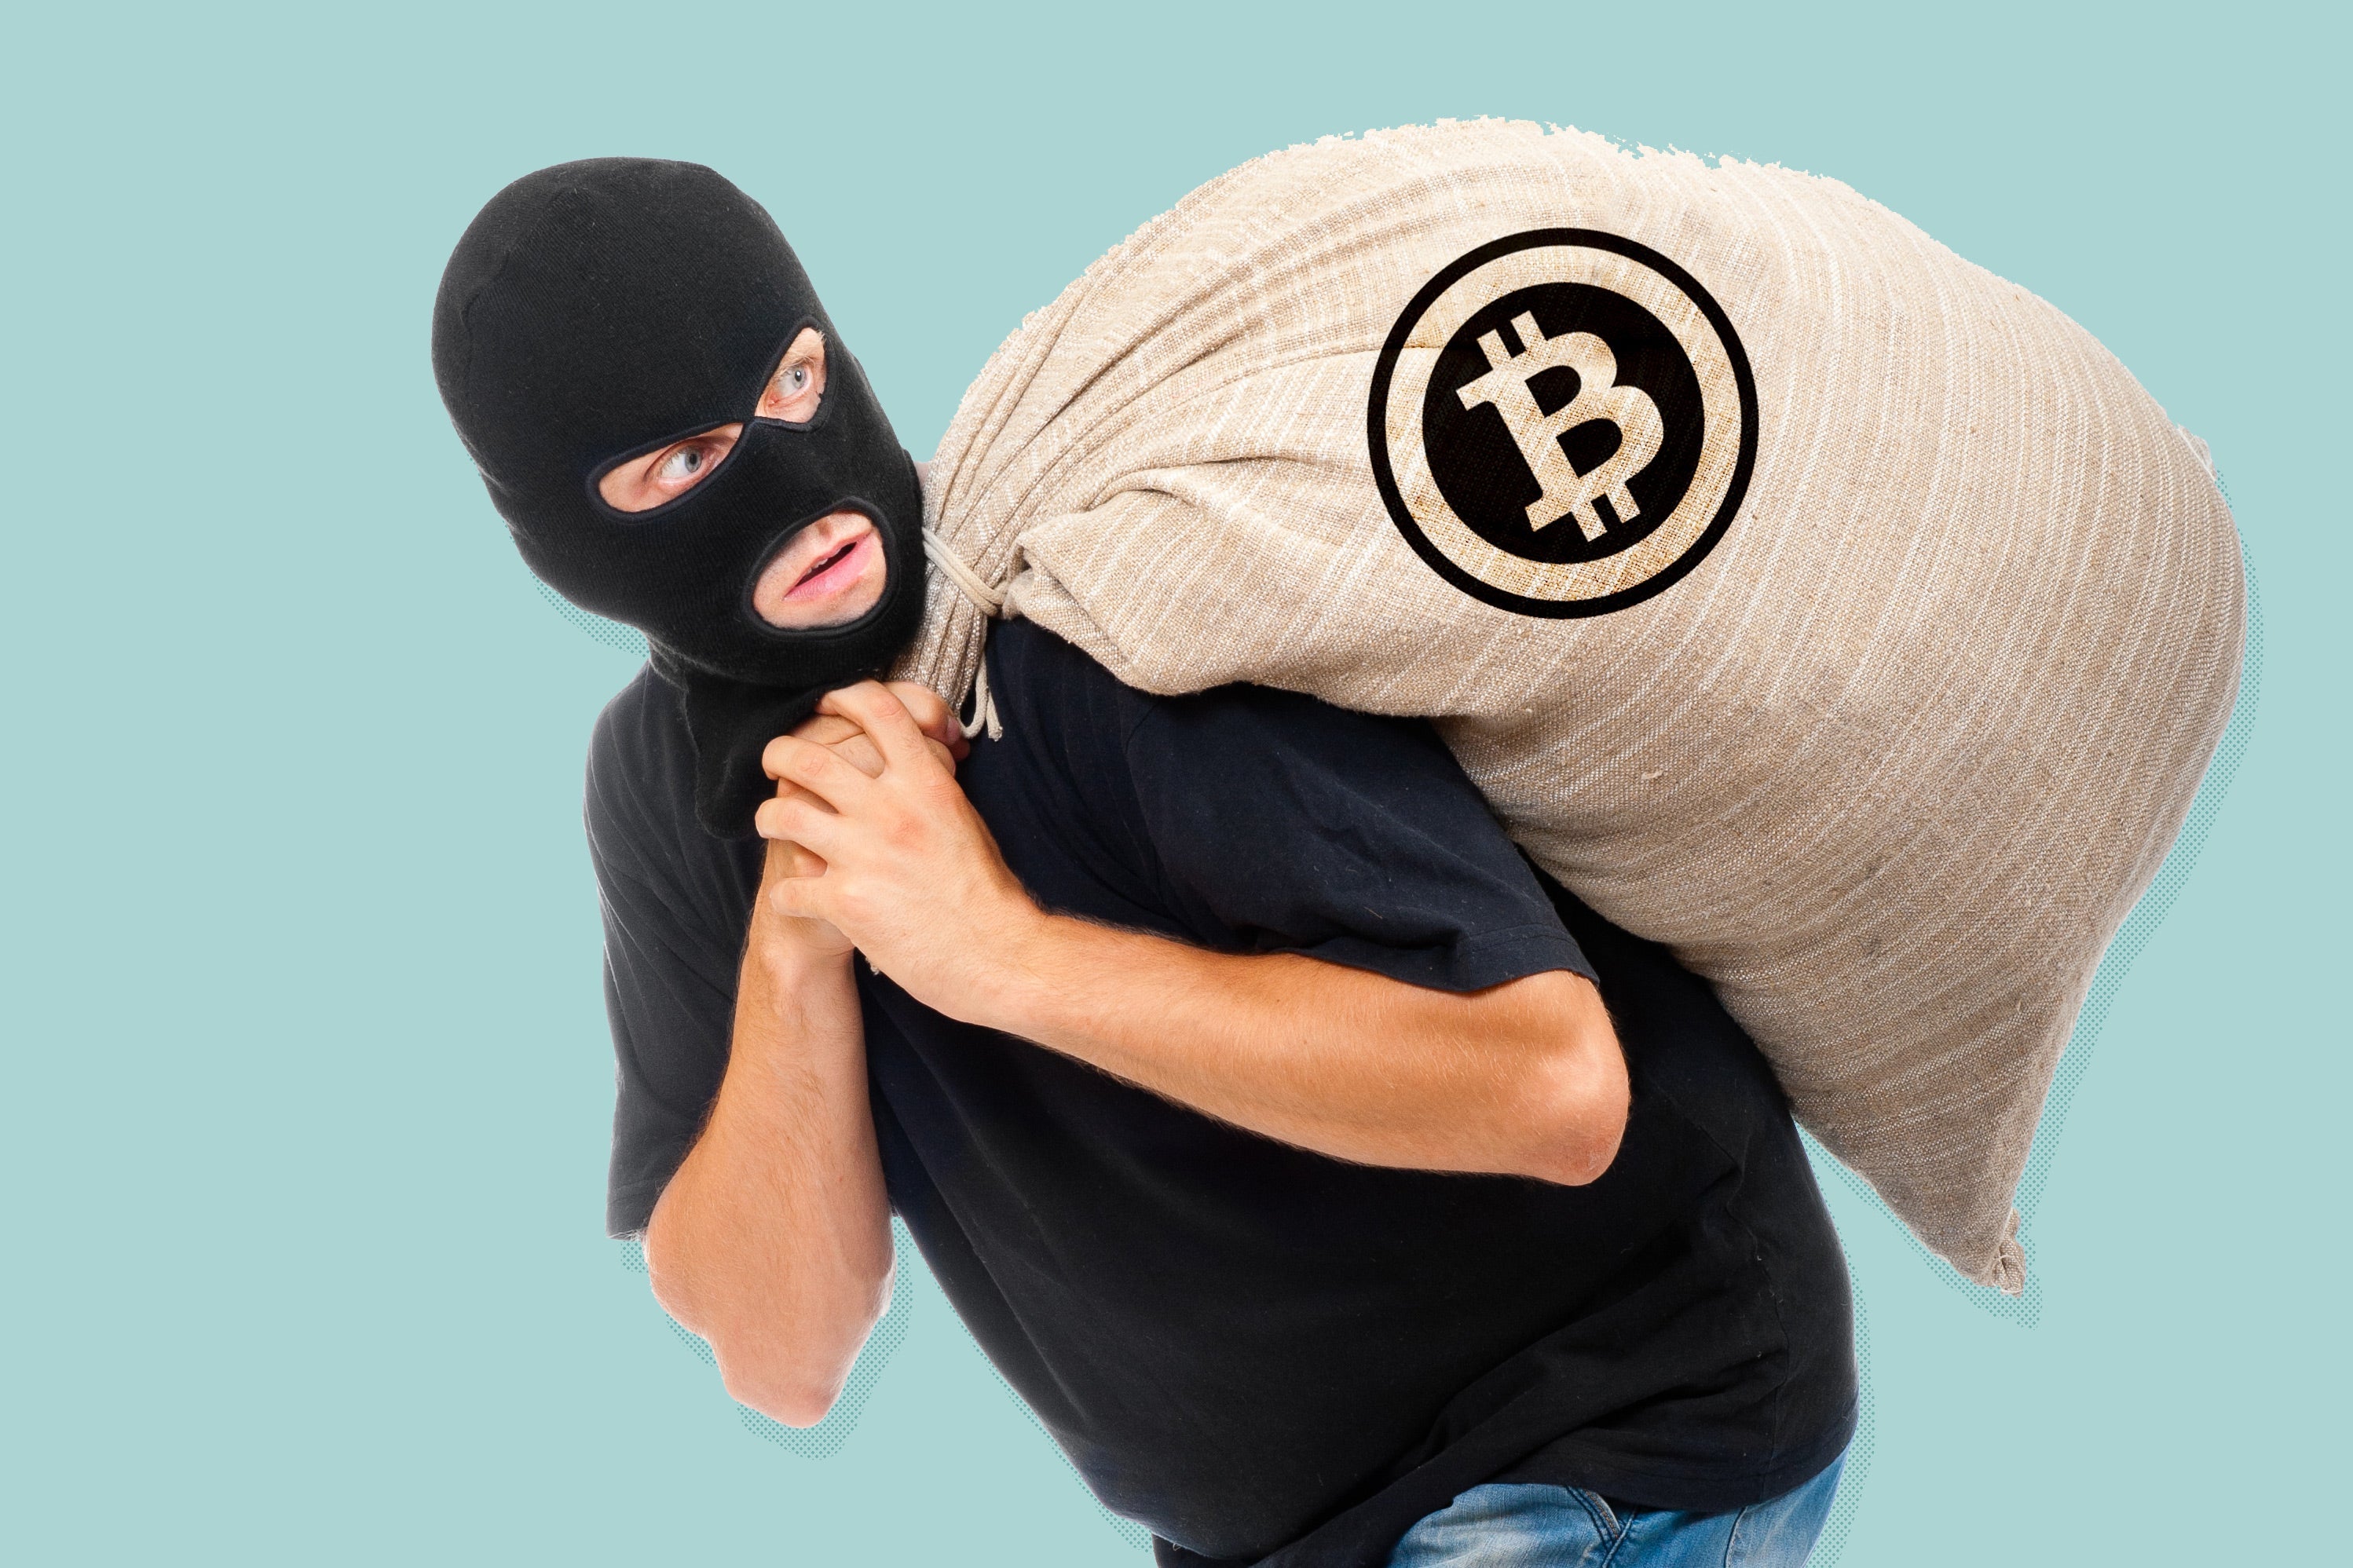 A man in a balaclava carries a burlap sack with a Bitcoin logo. 